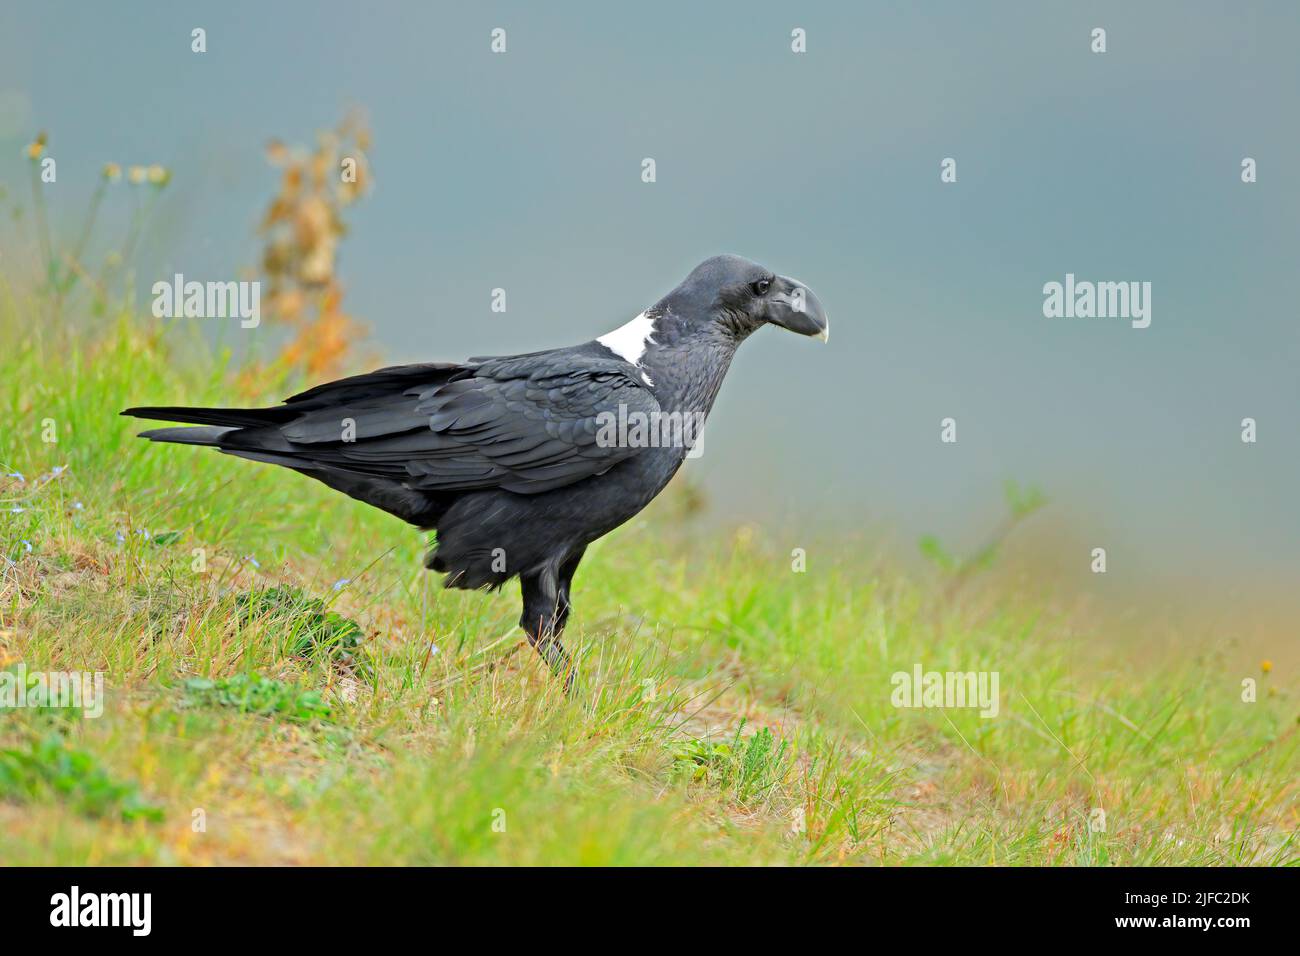 A white-necked raven (Corvus albicollis) sitting on green grass, South Africa Stock Photo